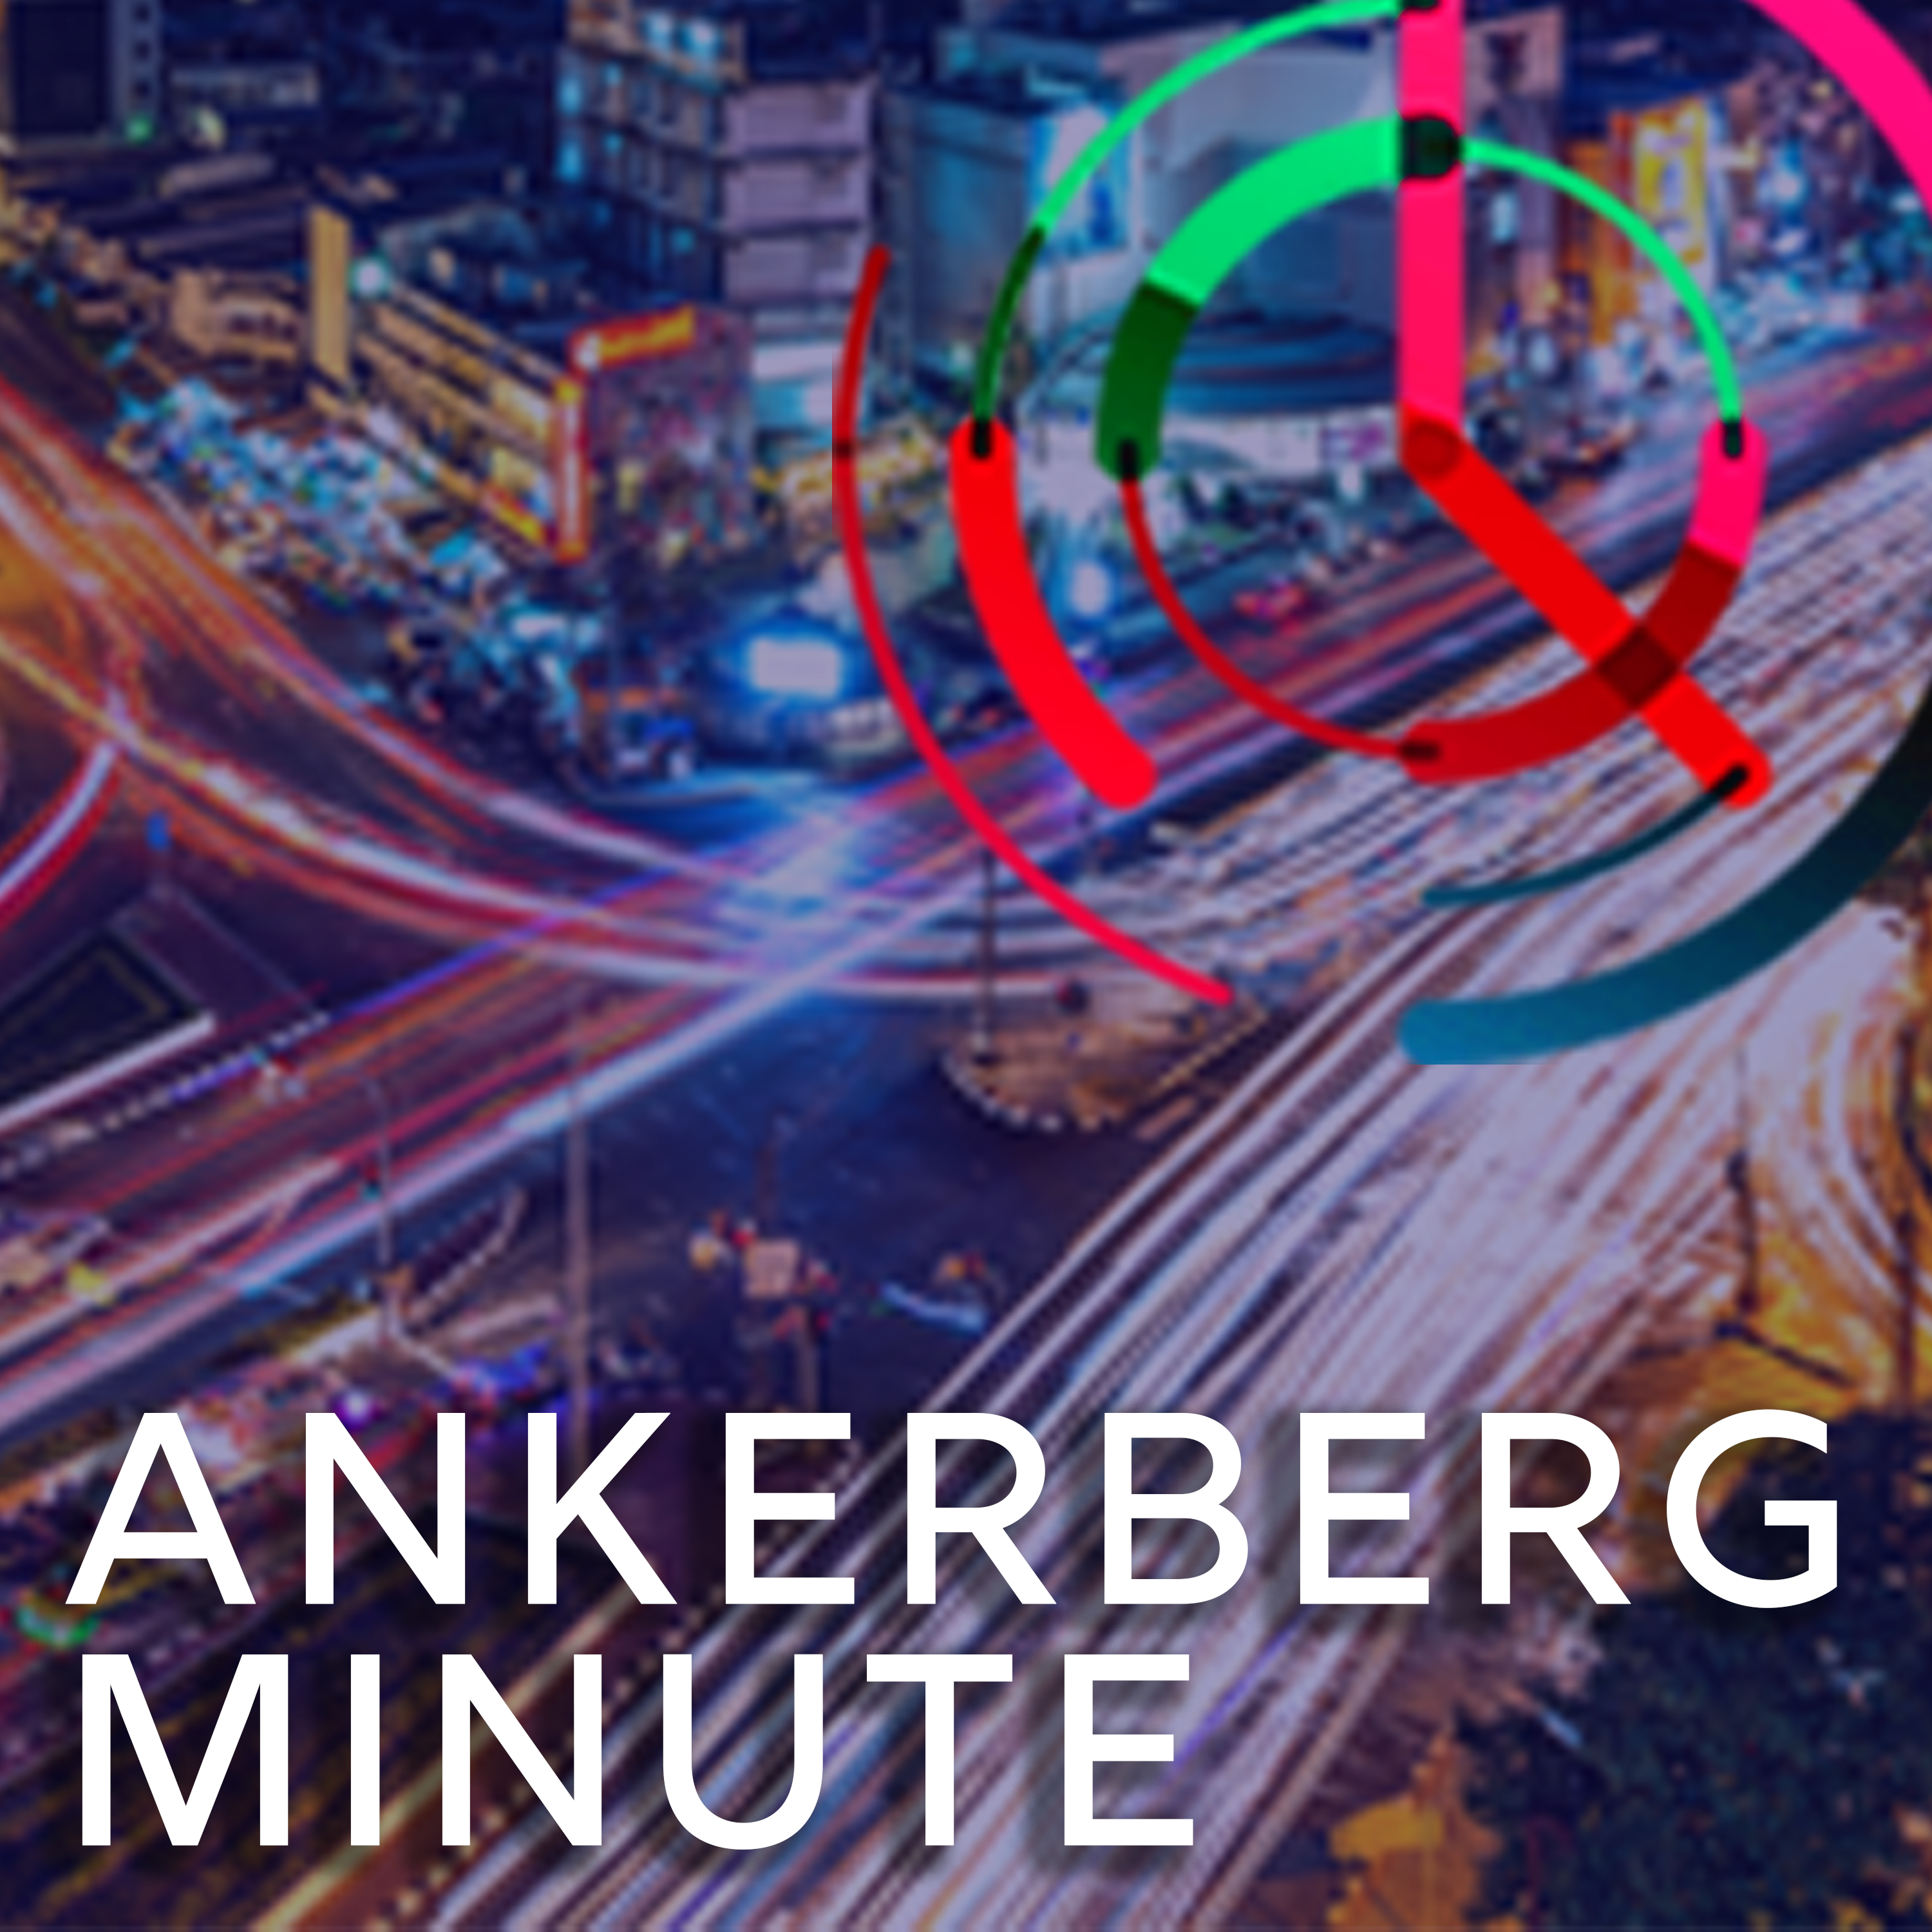 Ankerberg Minute